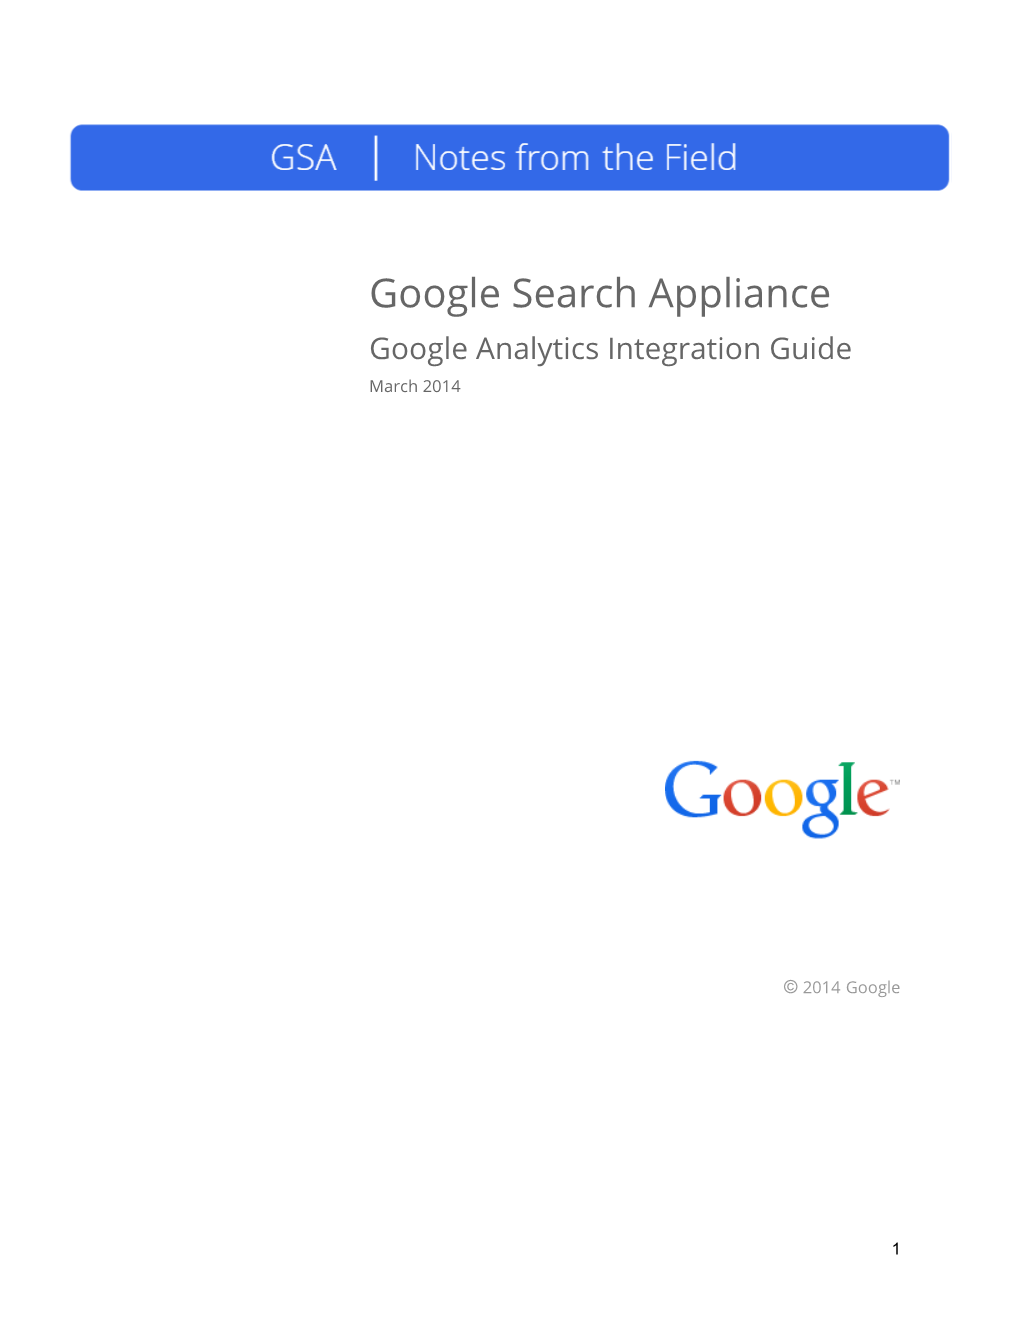 GSA Google Analytics Guide